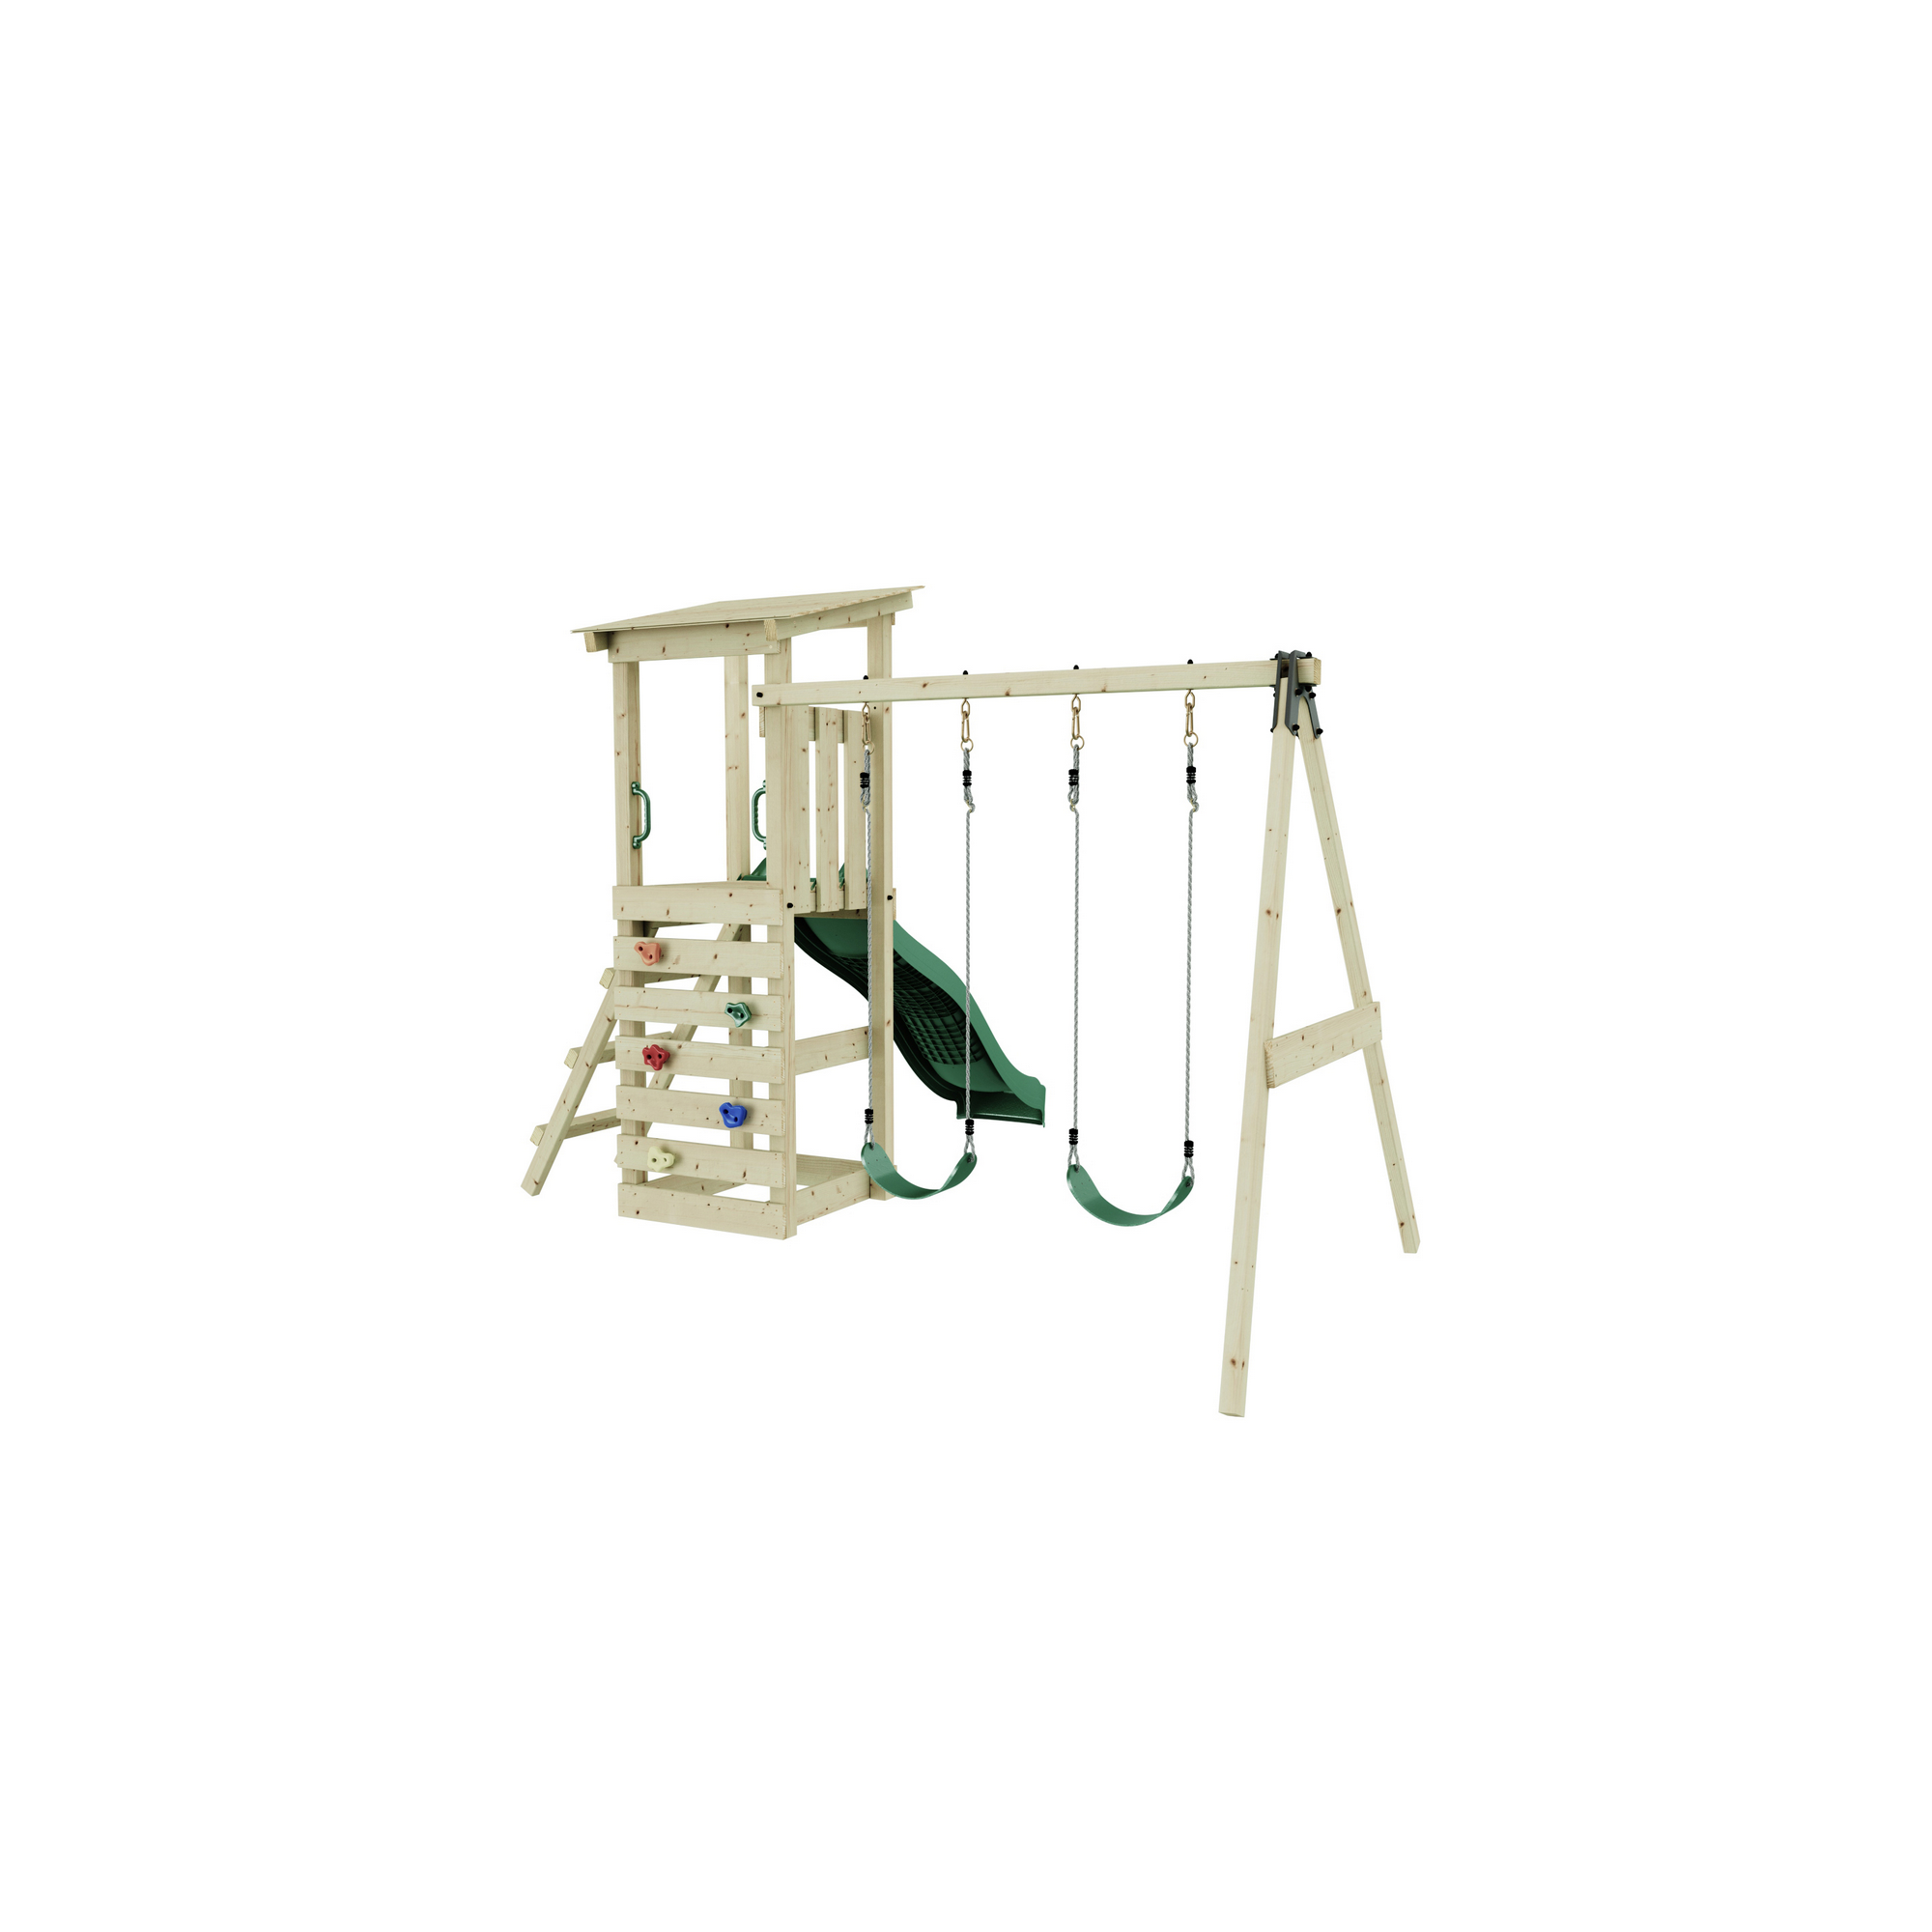 Spielturm 'Neapel' Sockelmaße 322,1 x 119,5 x 228,8 cm + product picture